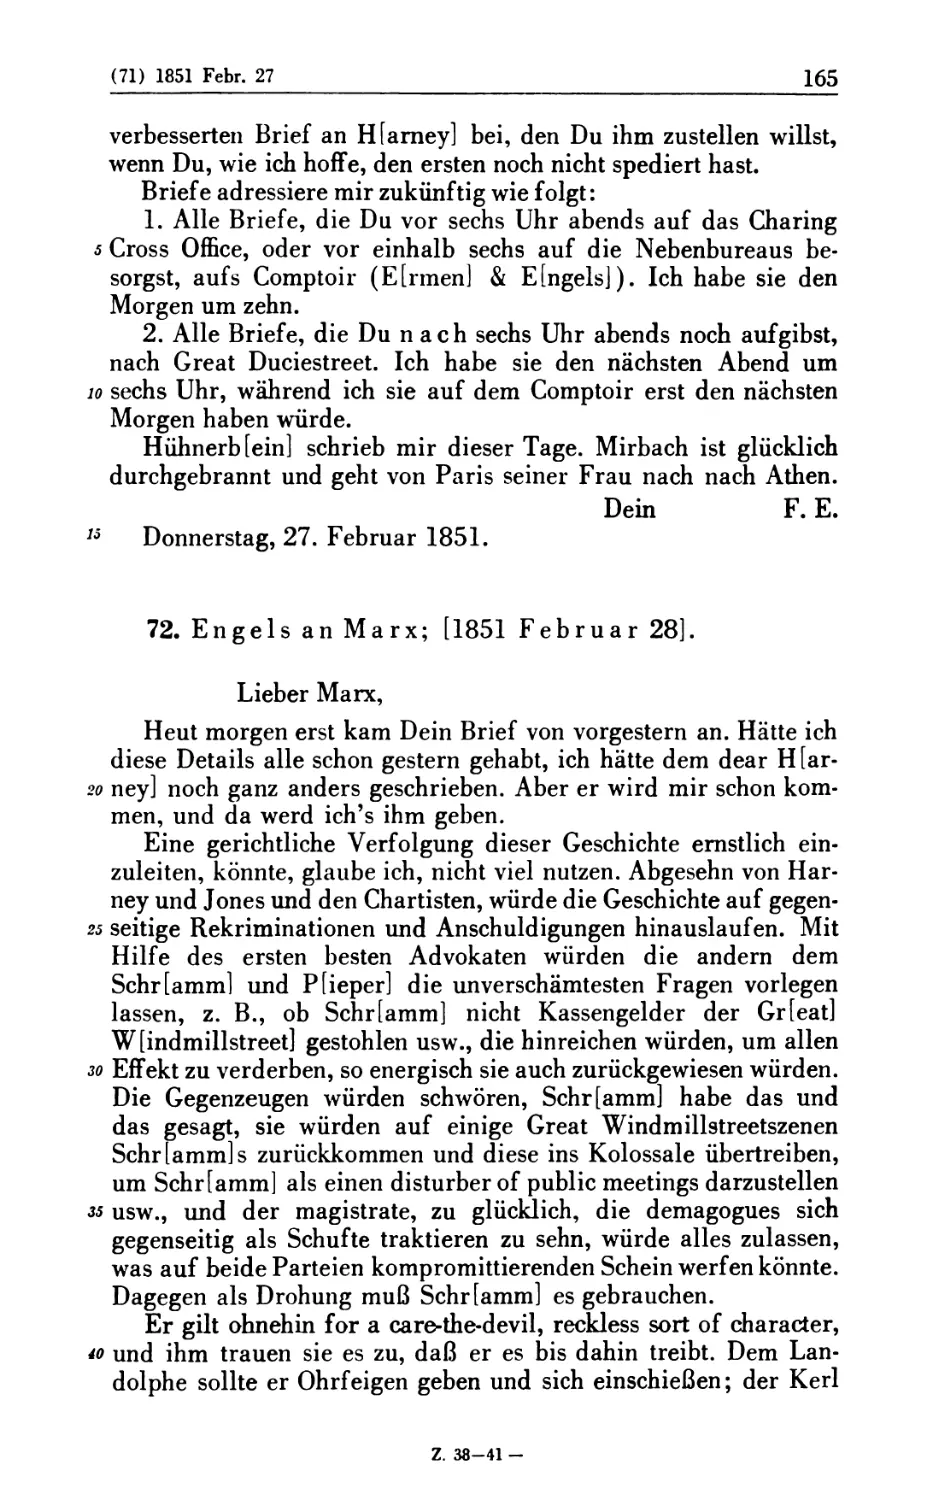 72. Engels an Marx; [1851 Februar 28]